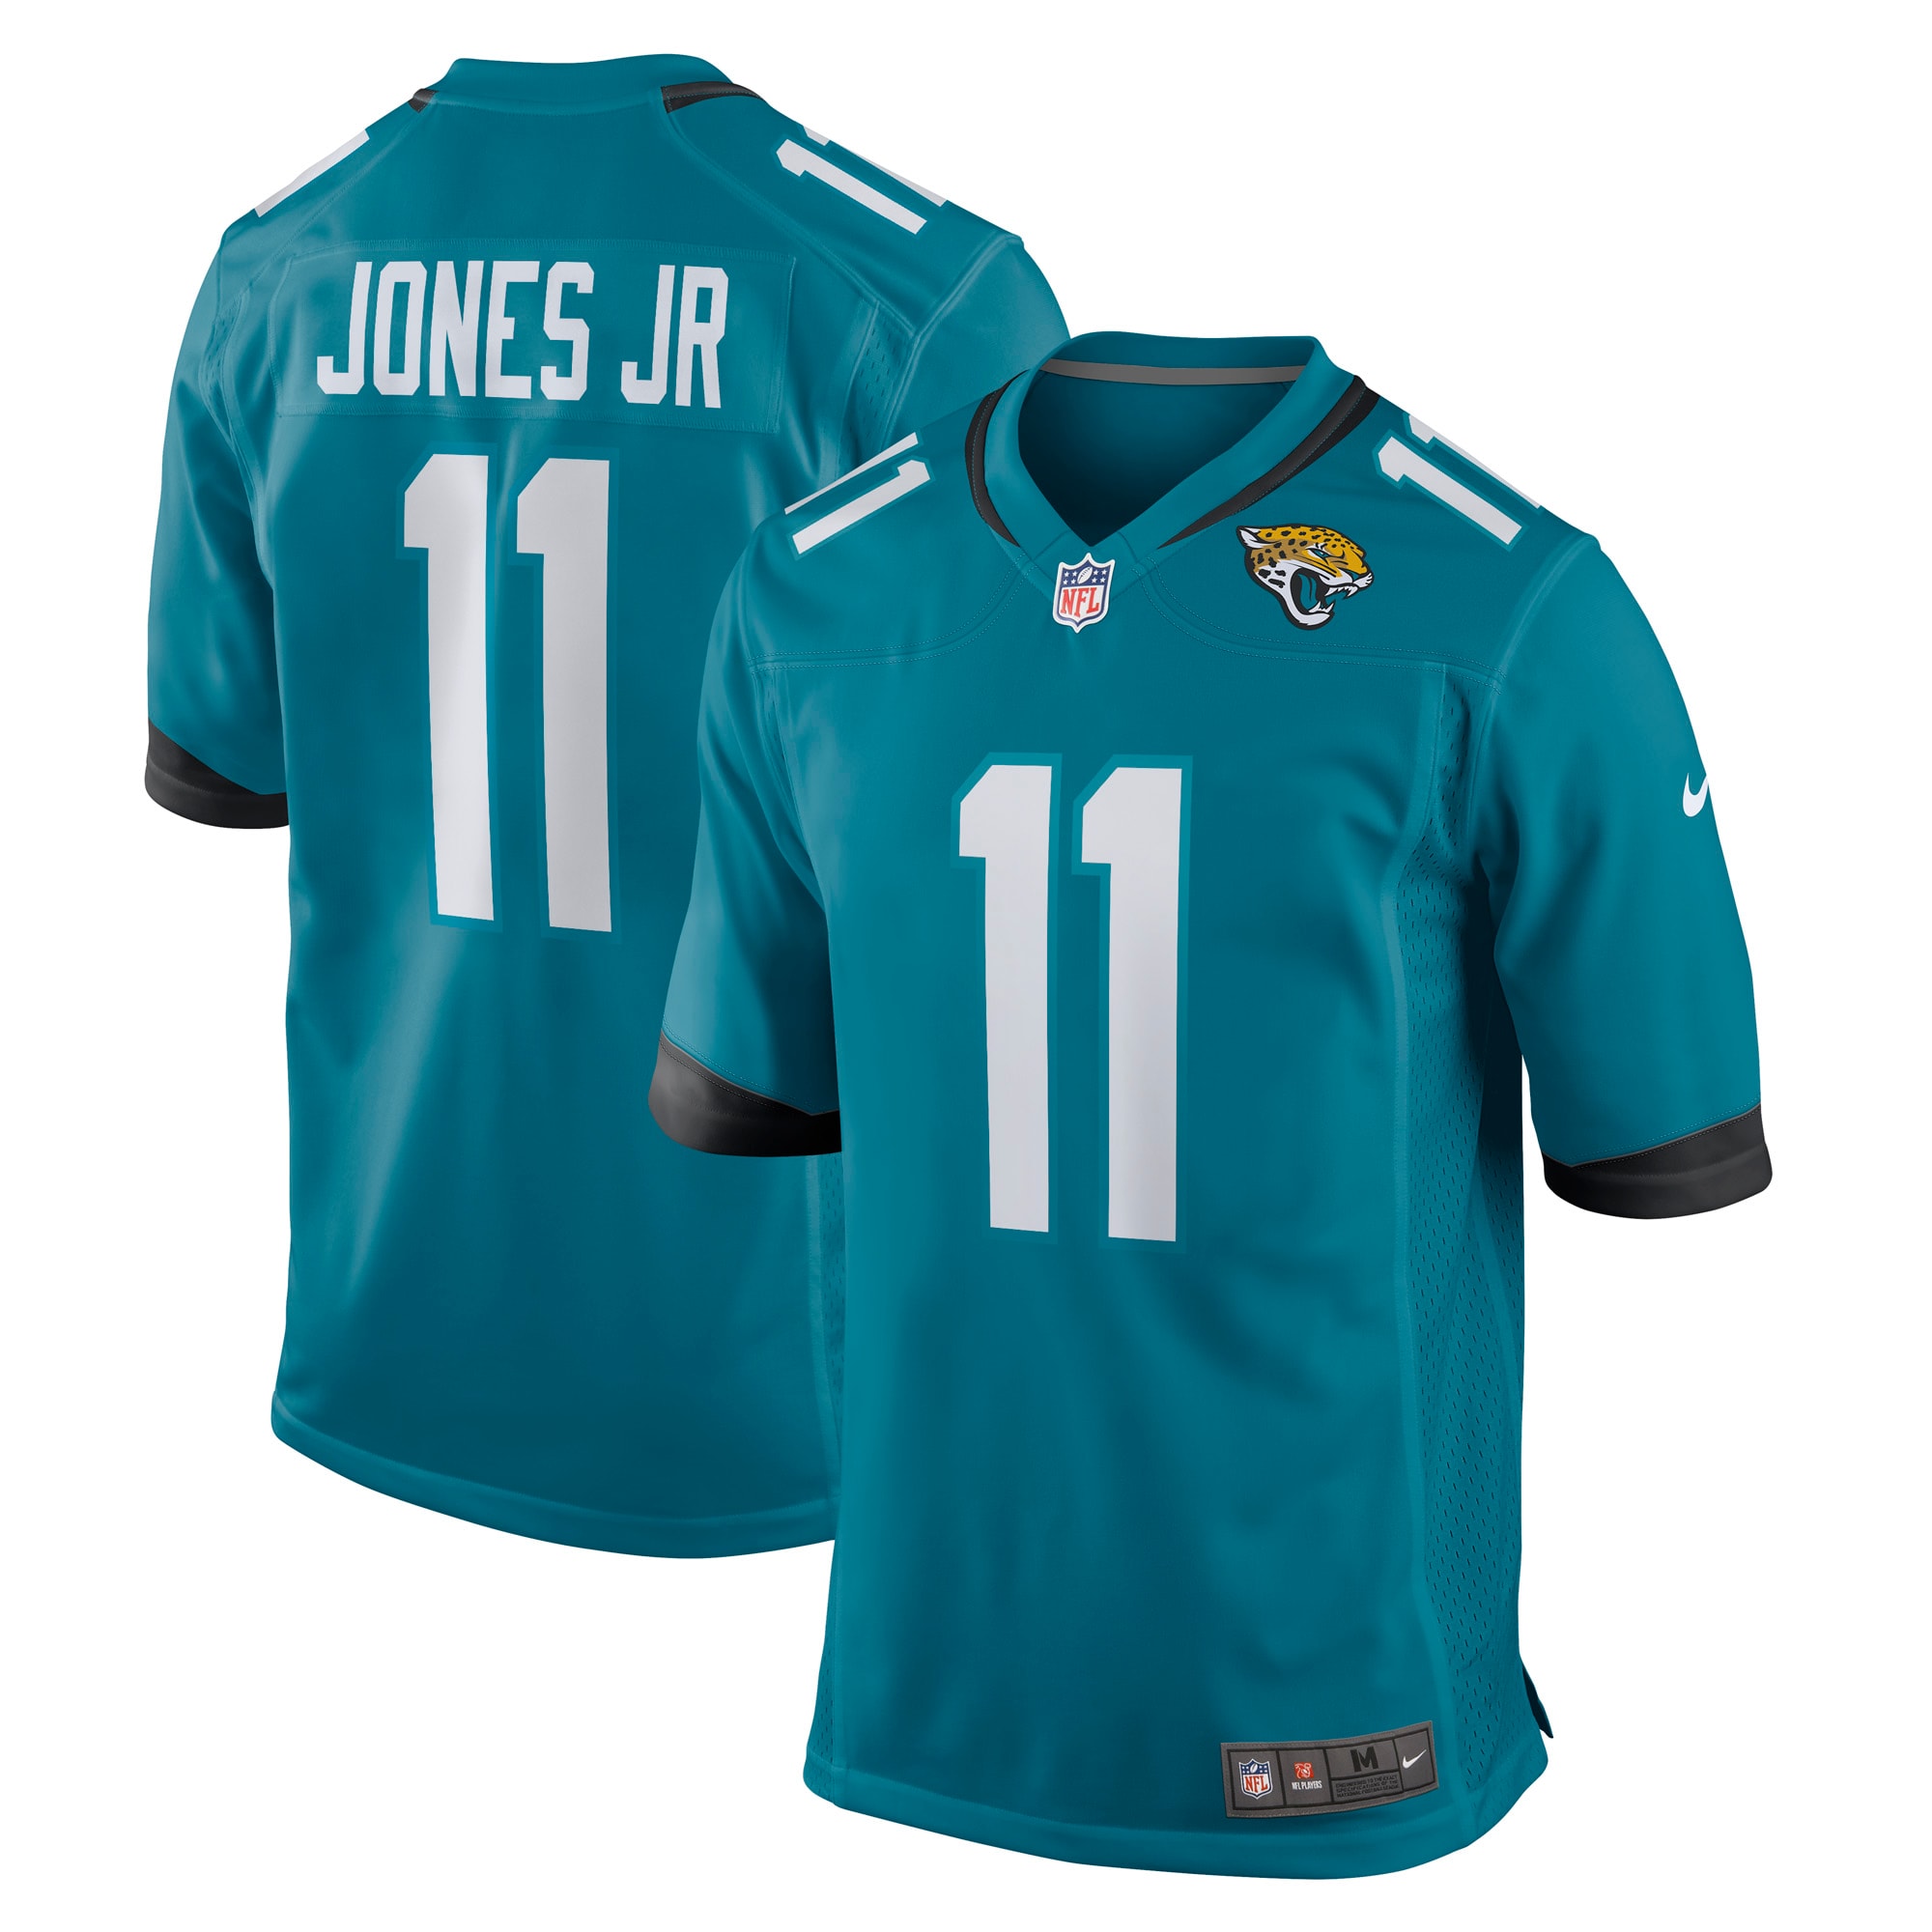 Men's Jacksonville Jaguars Jerseys Teal Marvin Jones Jr. Game Style